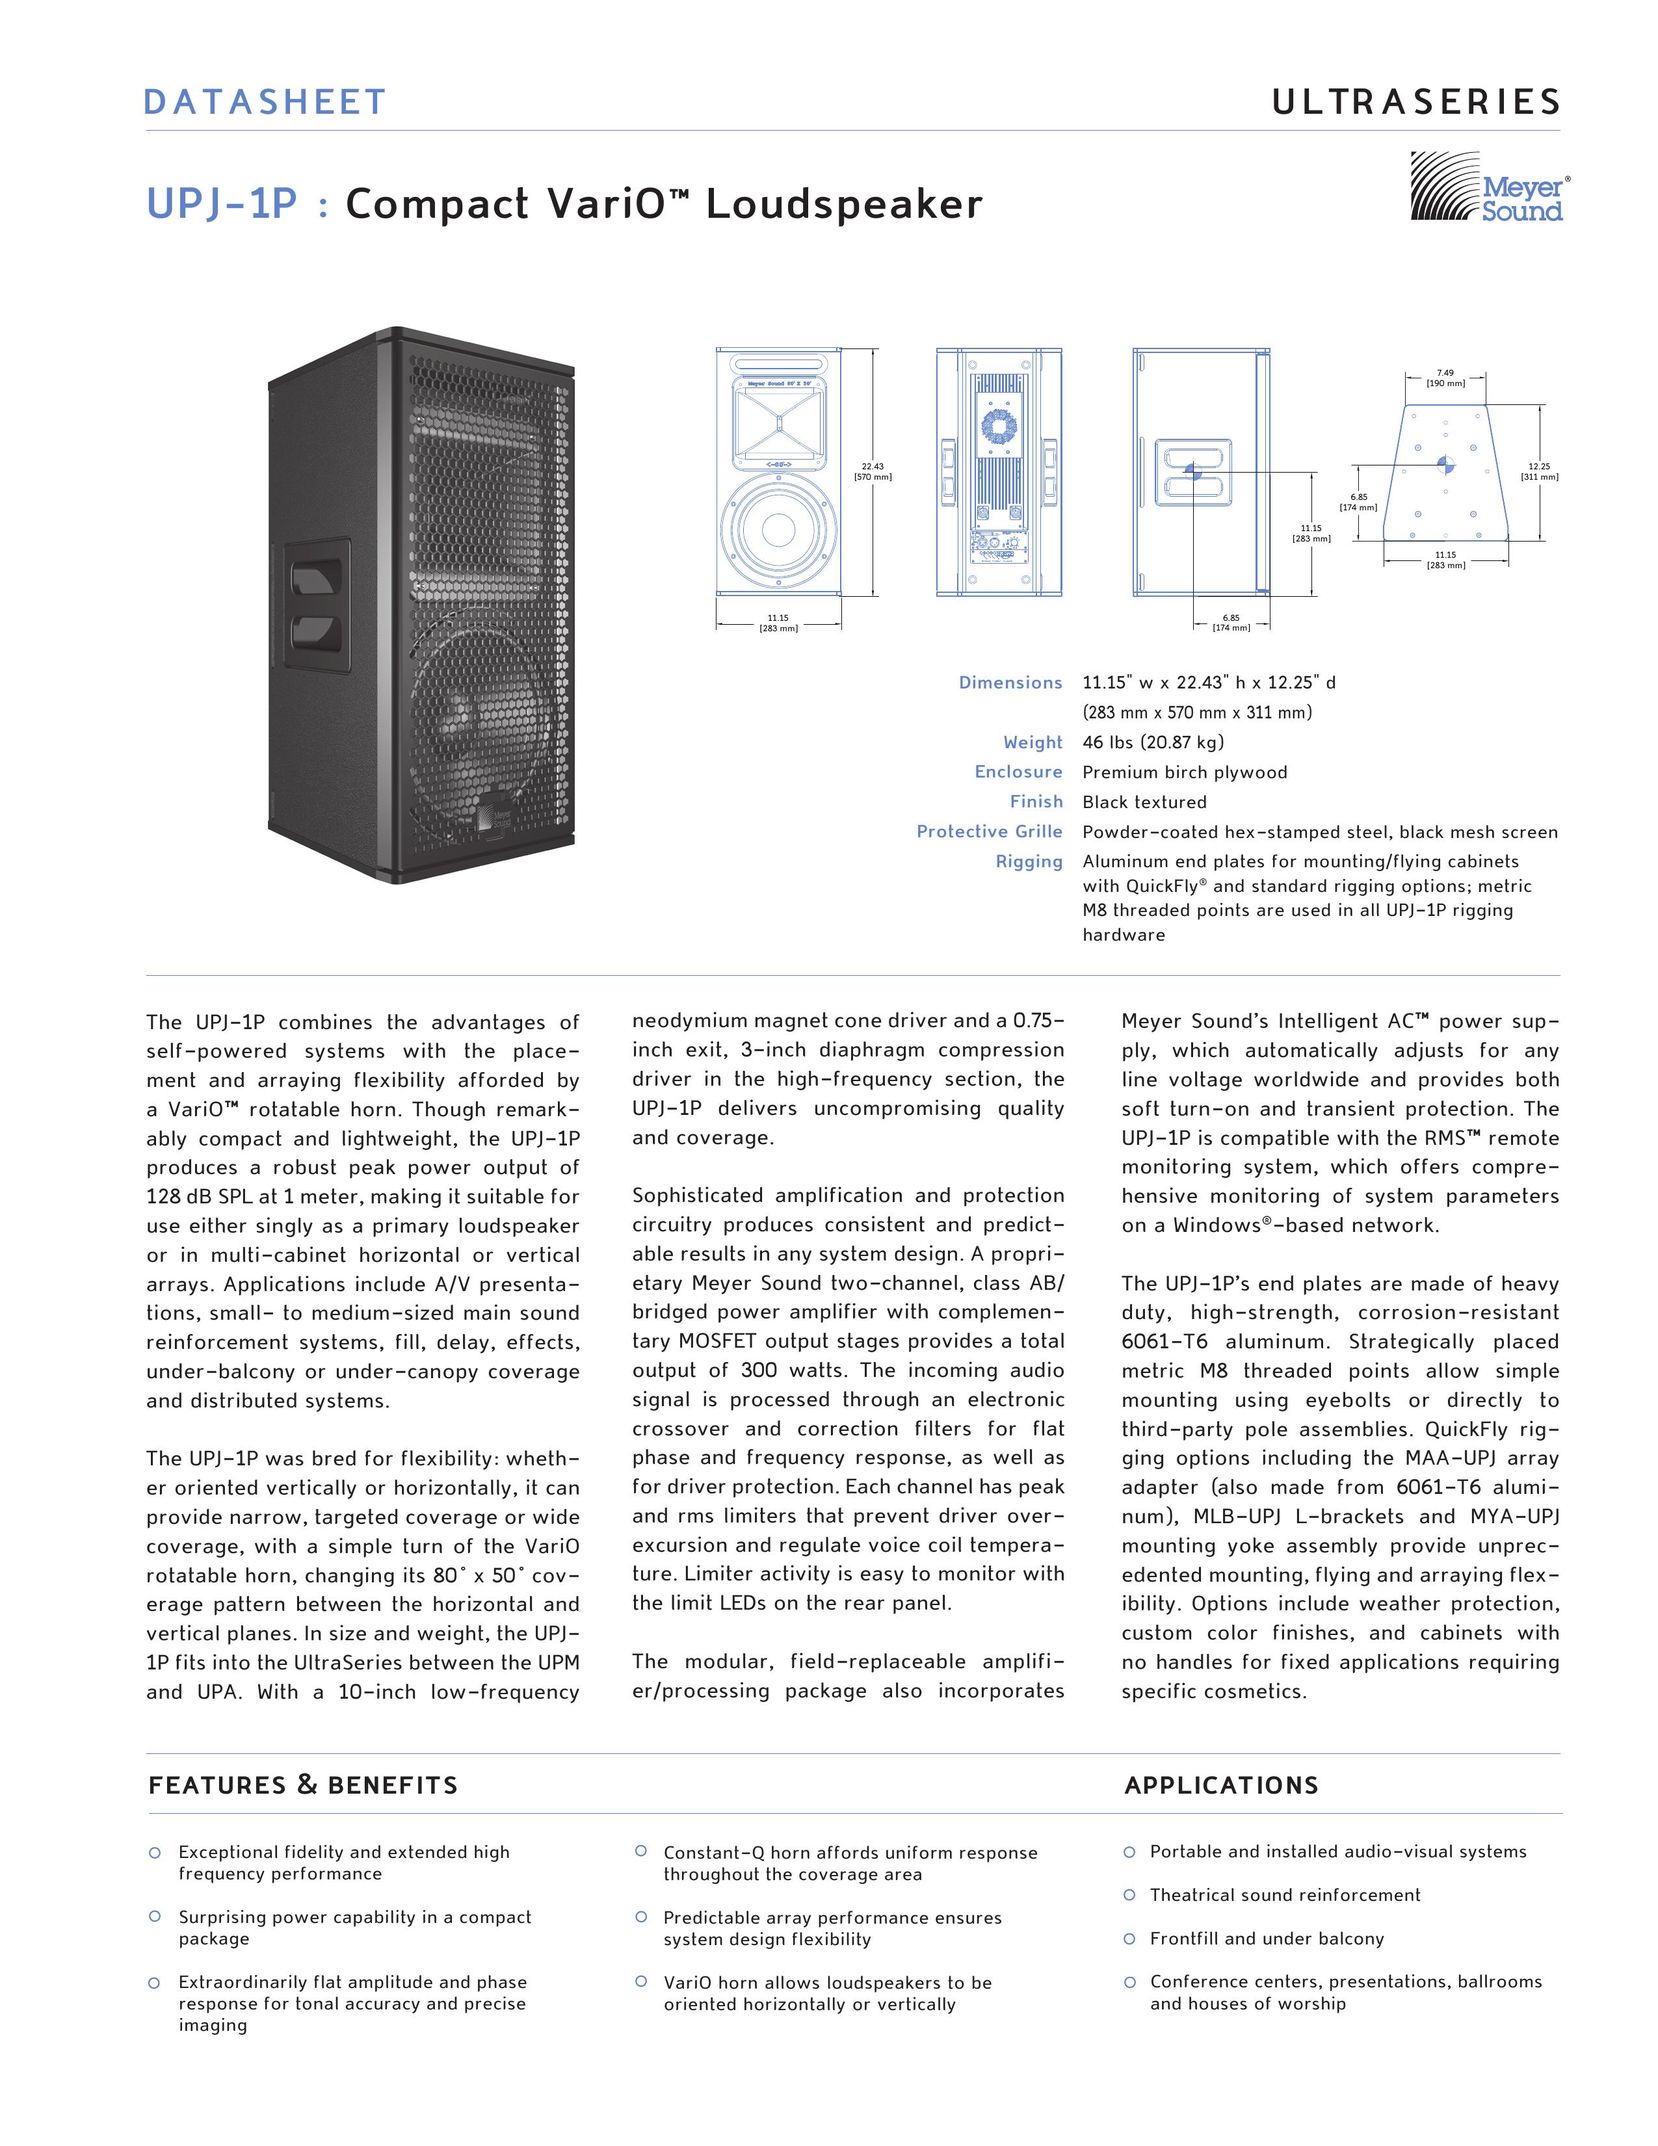 Meyer Sound UPJ-1P Portable Speaker User Manual